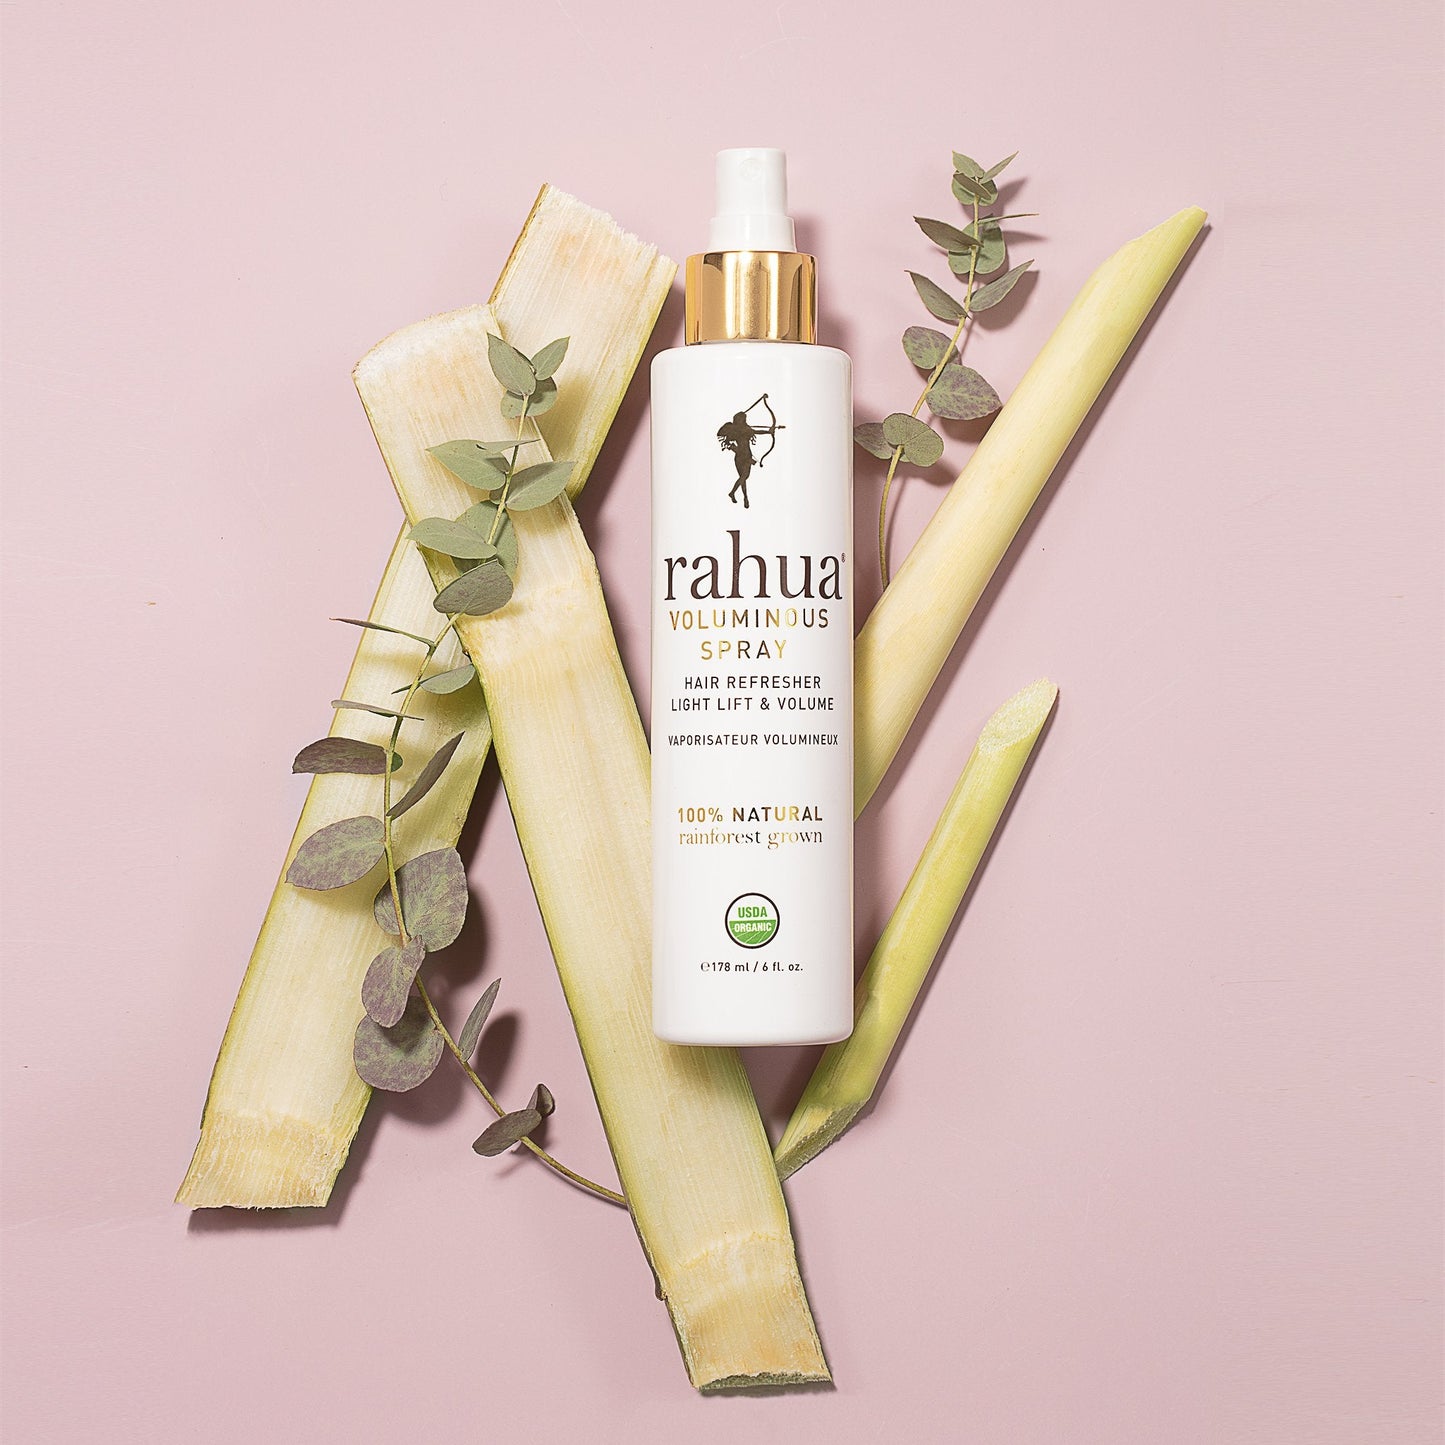 Rahua Voluminous Spray bottle with Lemongrass, Sugercane, and Eucalyptus